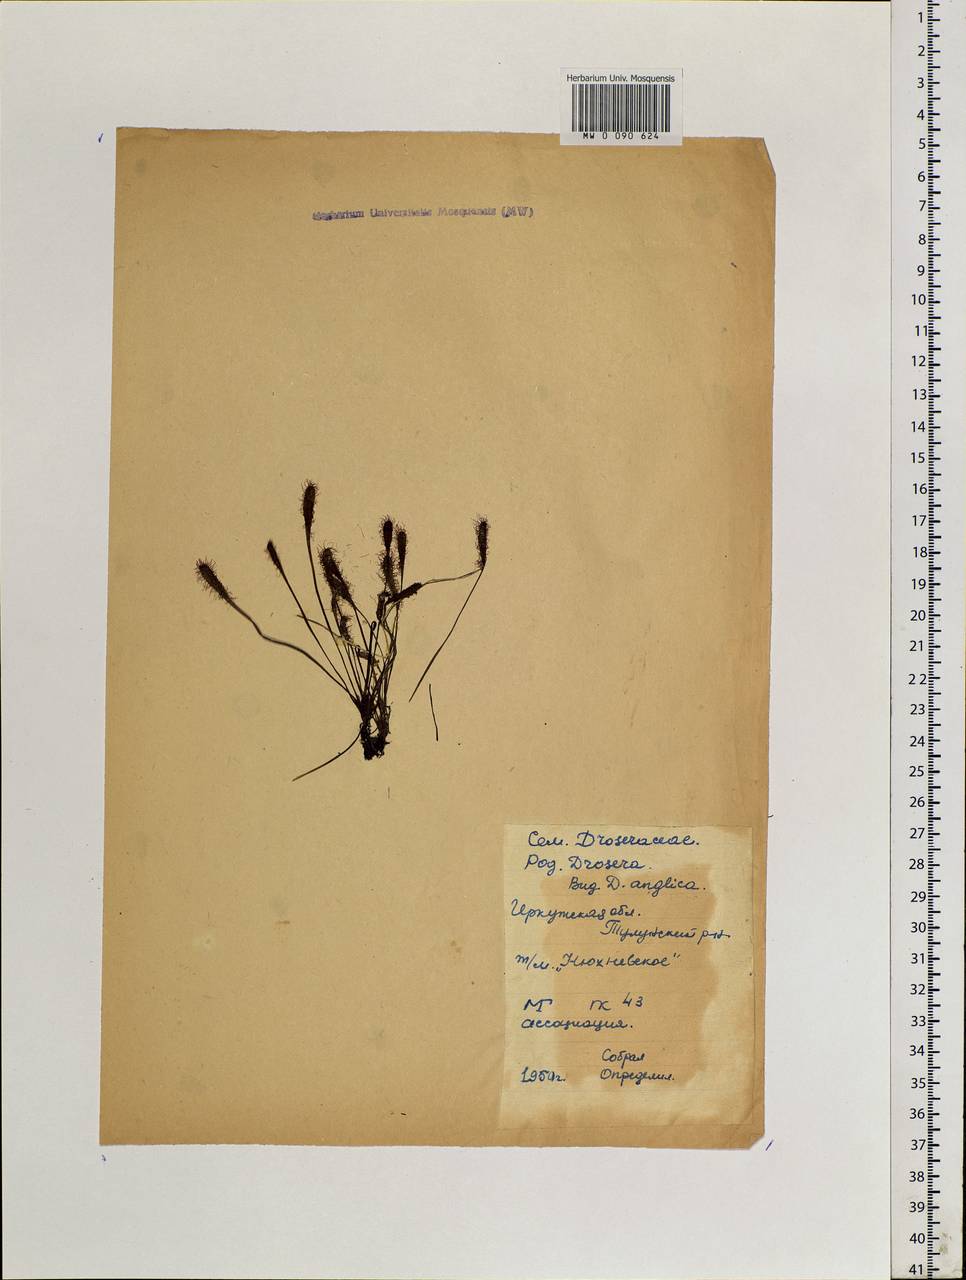 Drosera ×anglica Huds., Сибирь, Прибайкалье и Забайкалье (S4) (Россия)